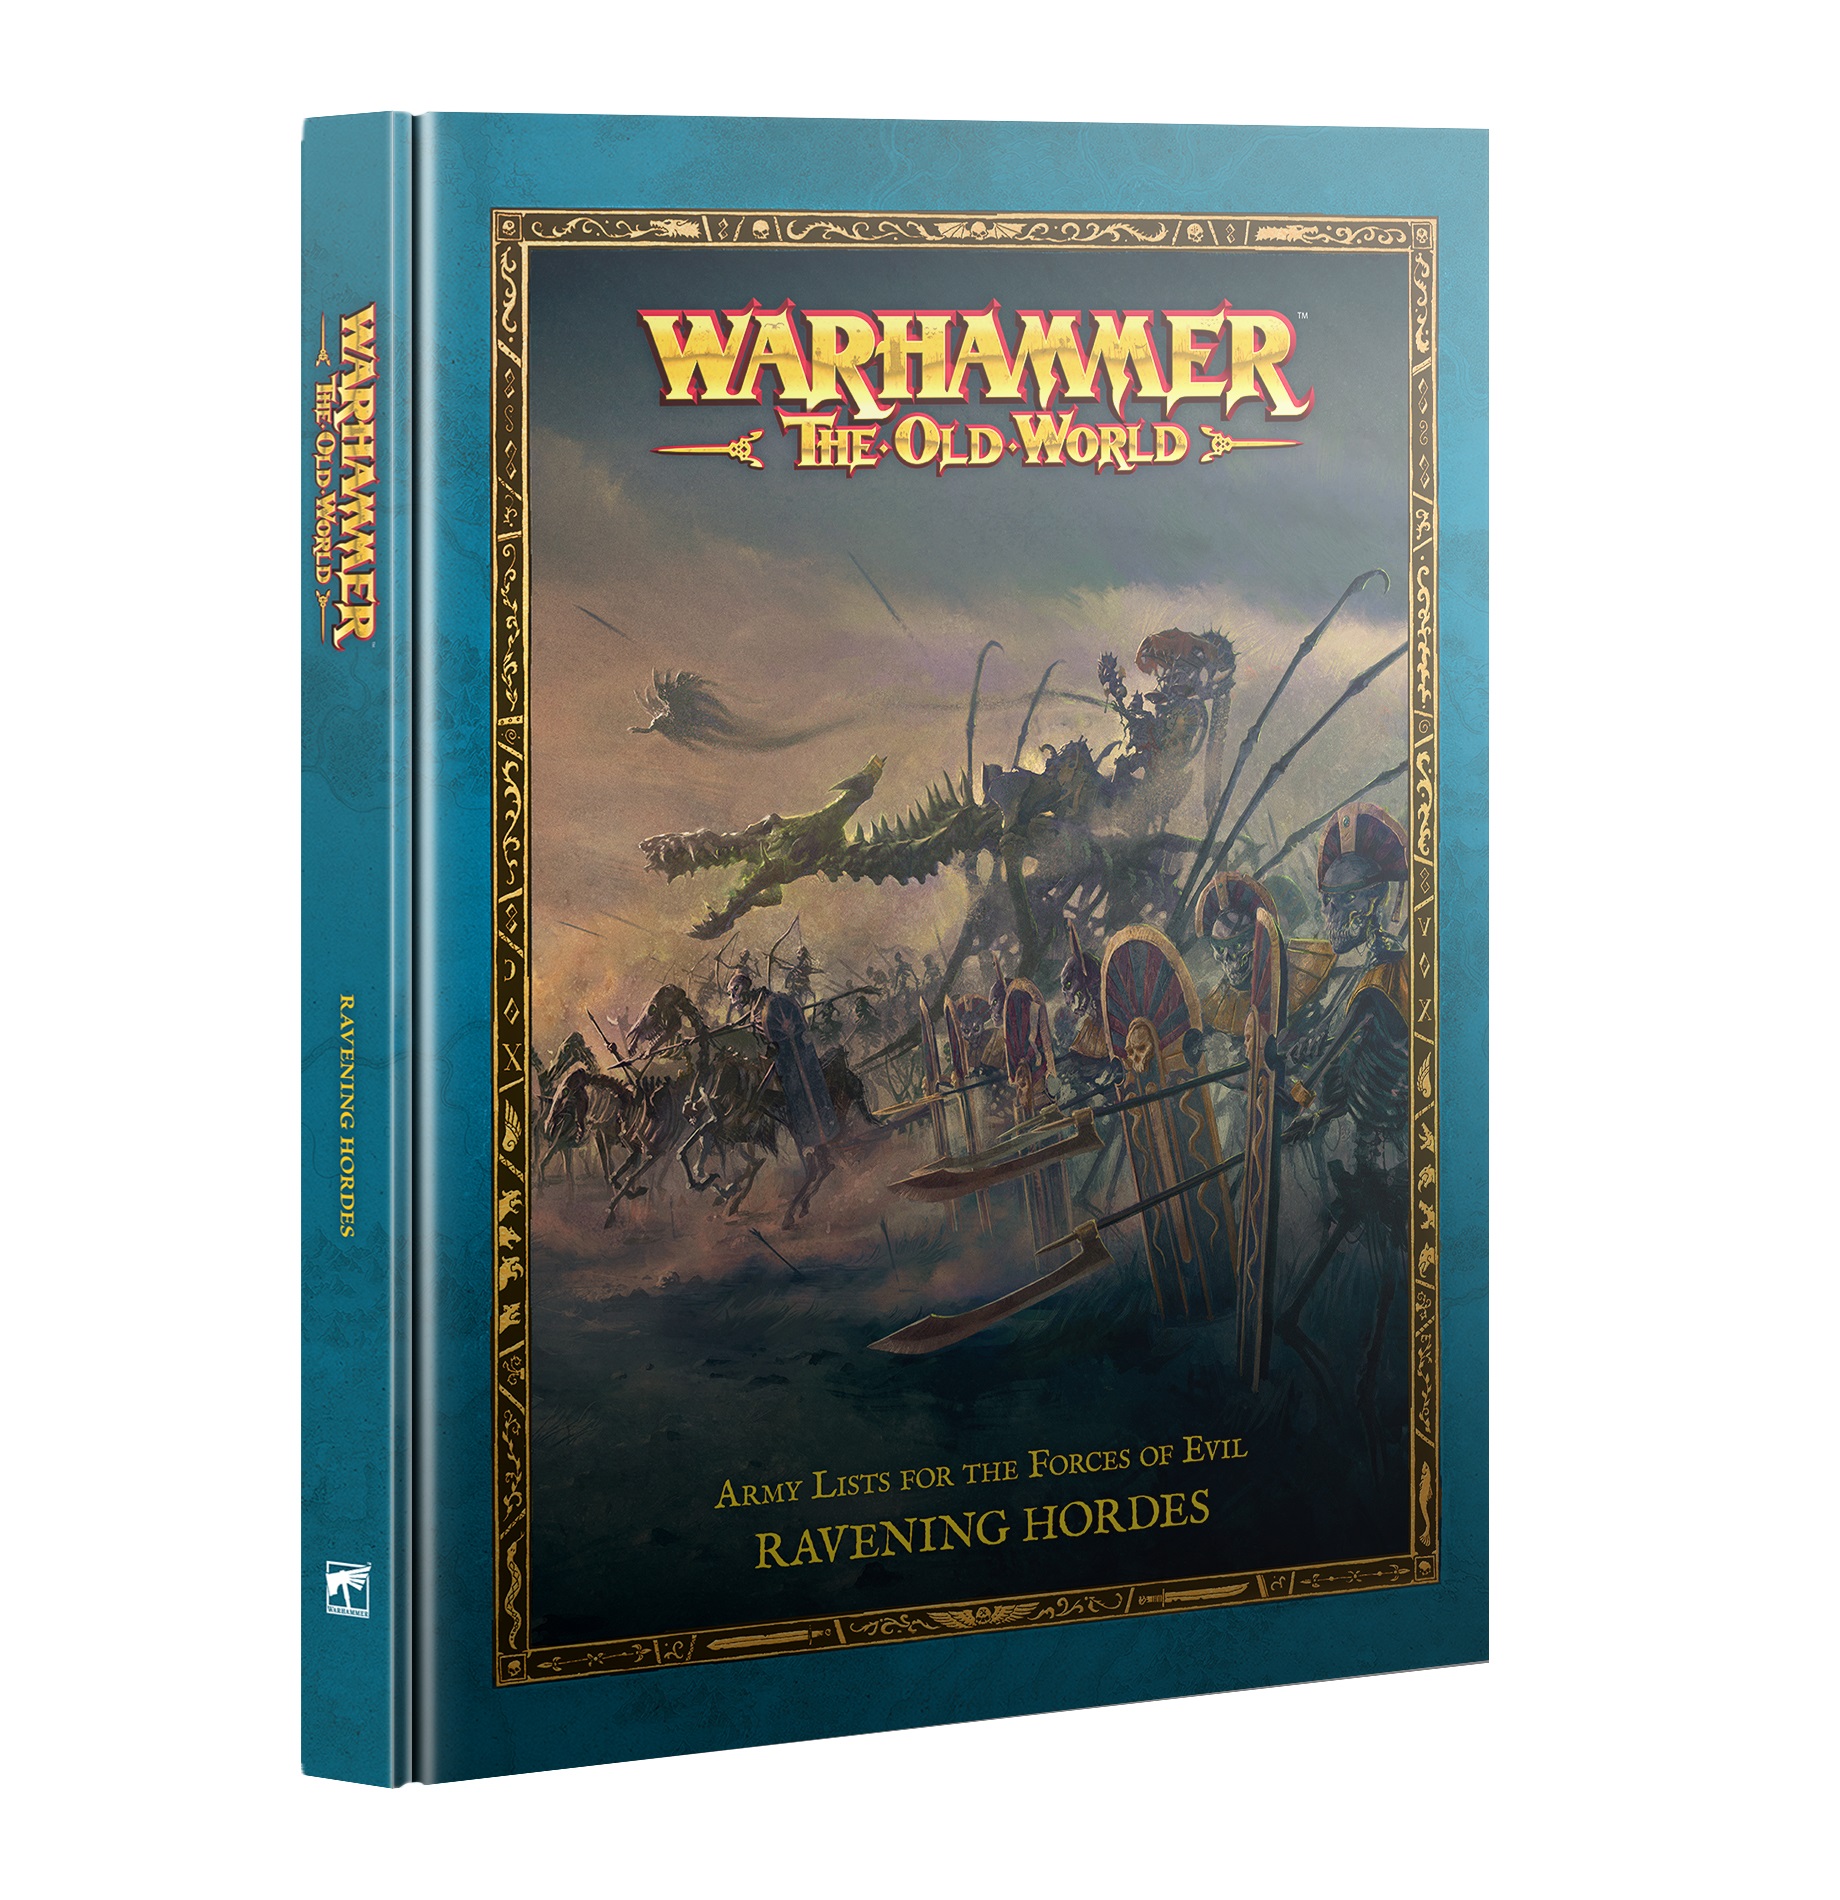 Warhammer: The Old World Ravening Hordes Book